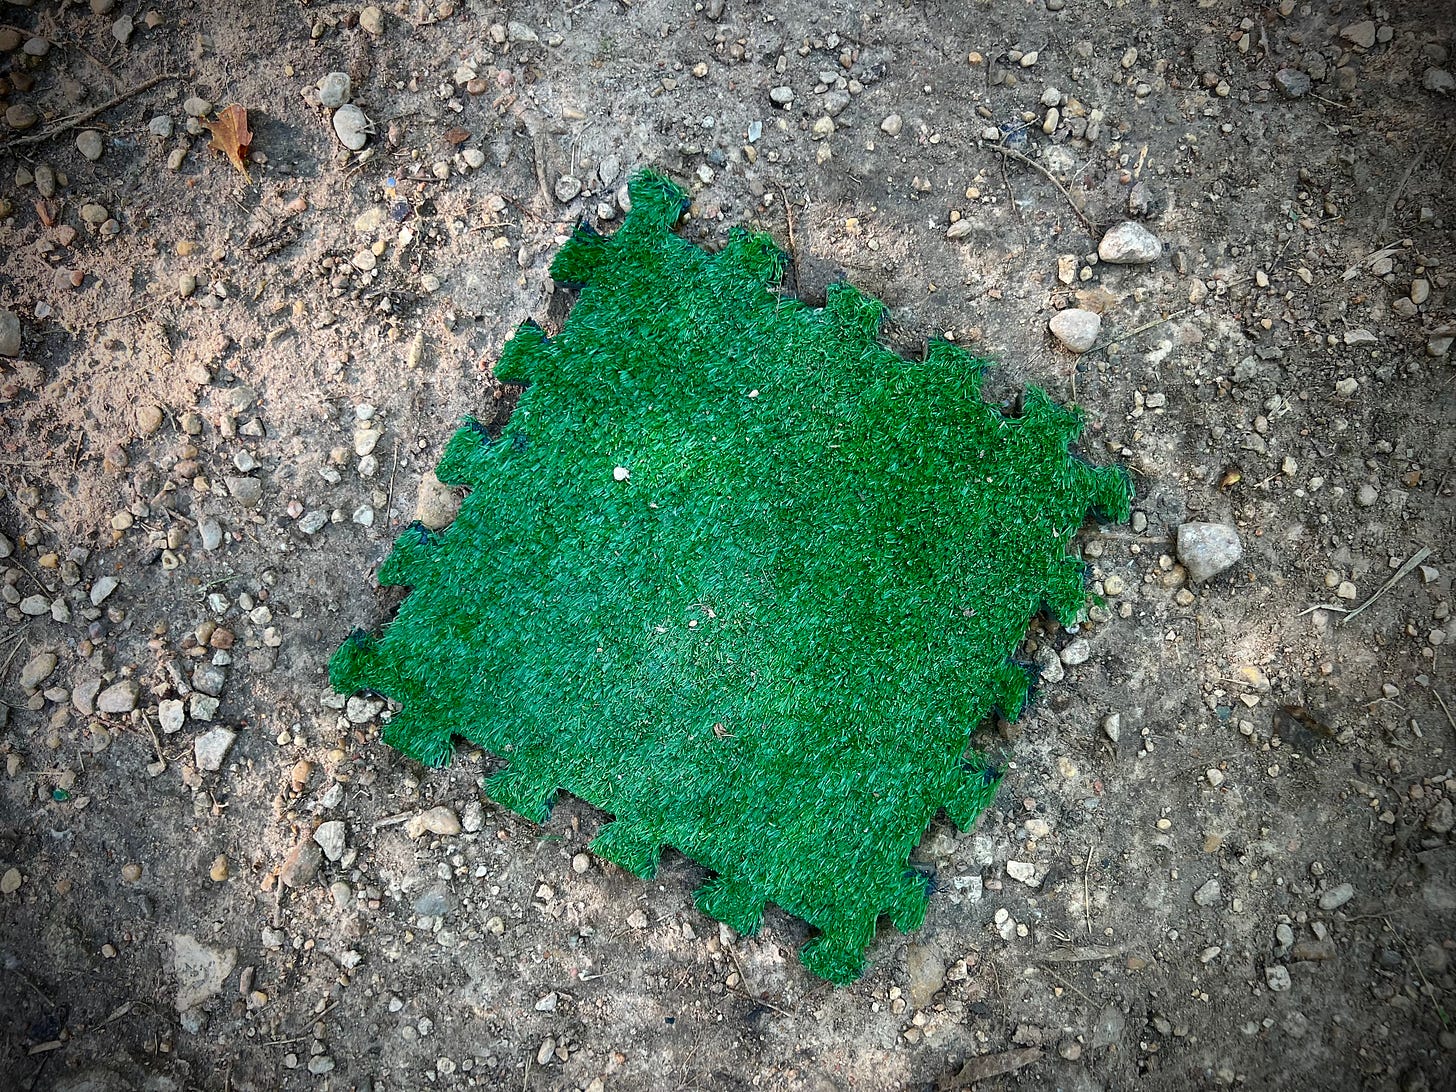 Astroturf fragment on pavement